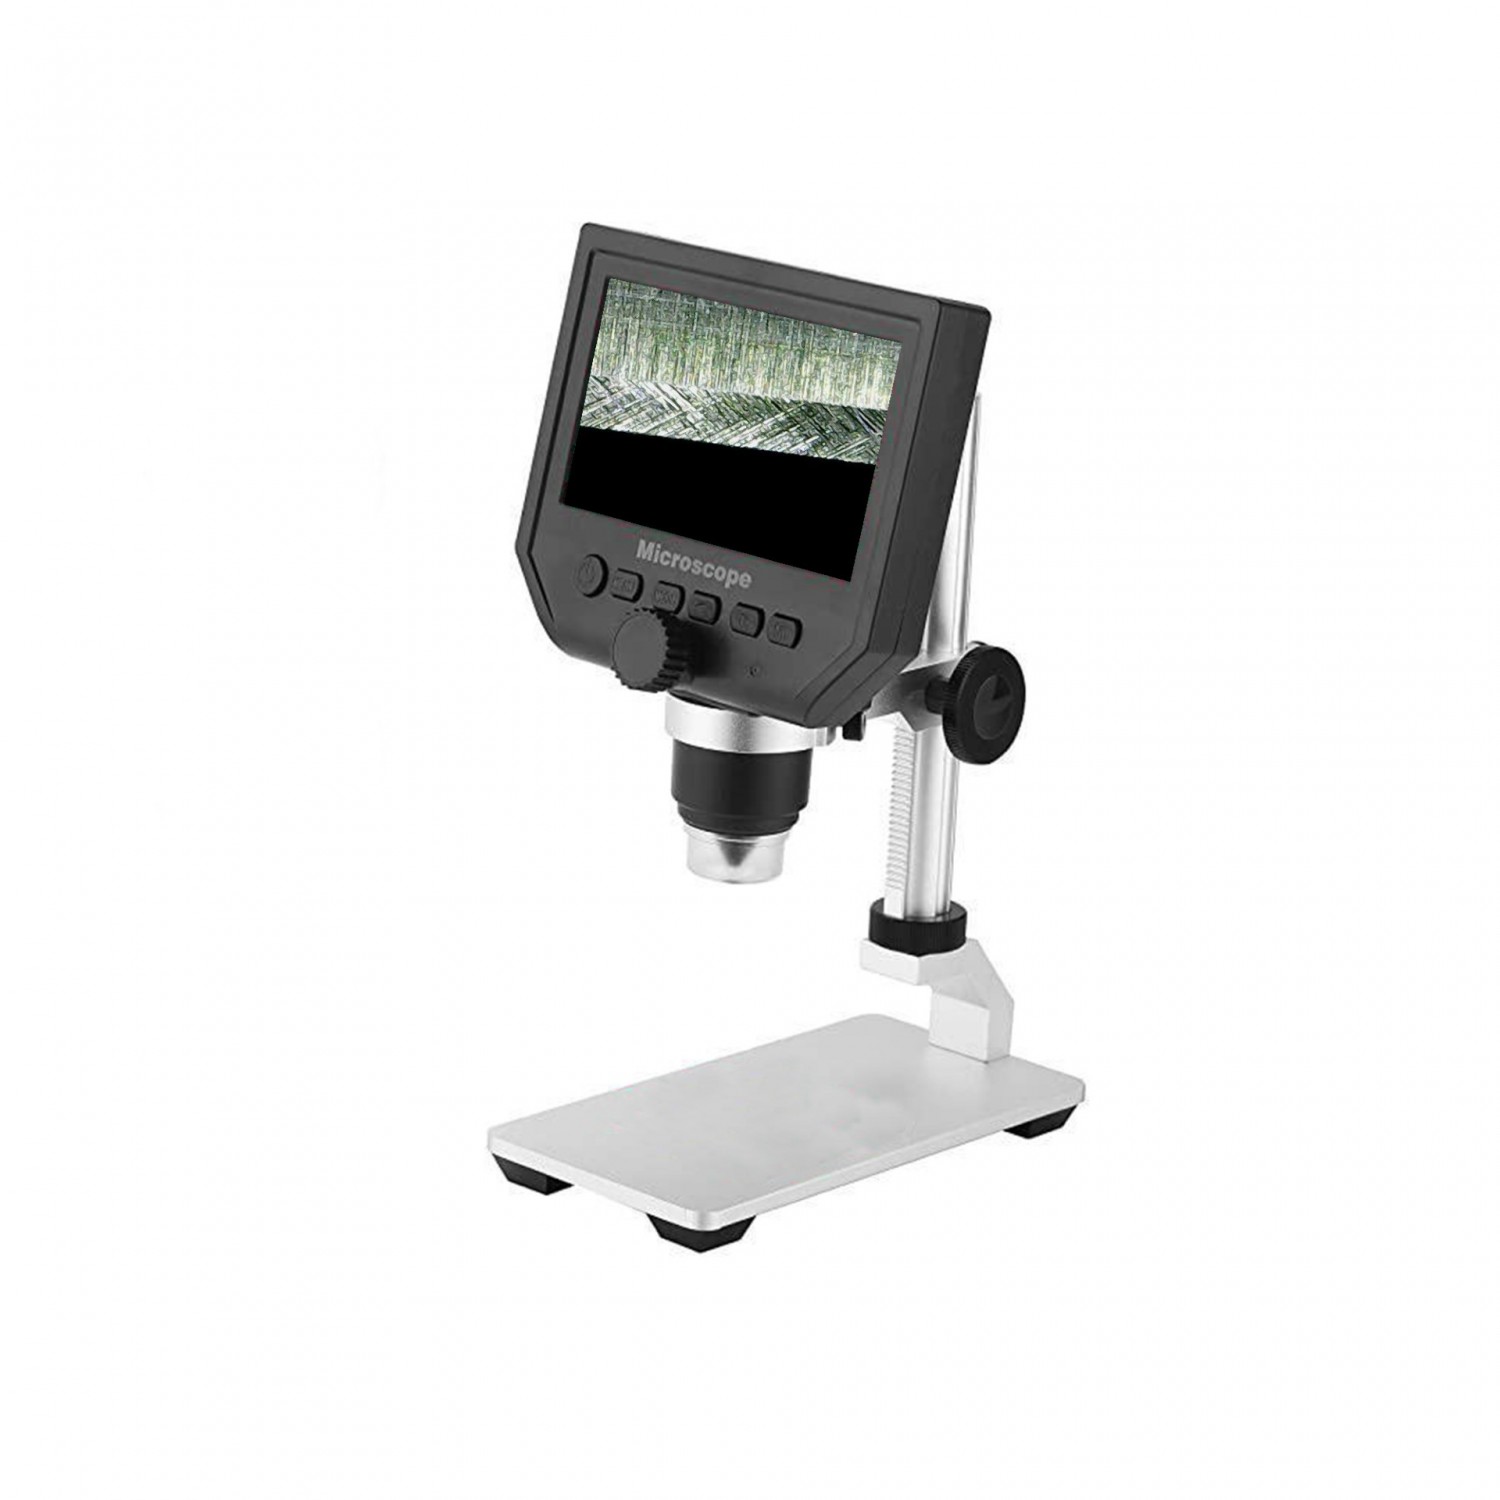 Digital microscope 1-1600X 4,3" inch HD LCD display